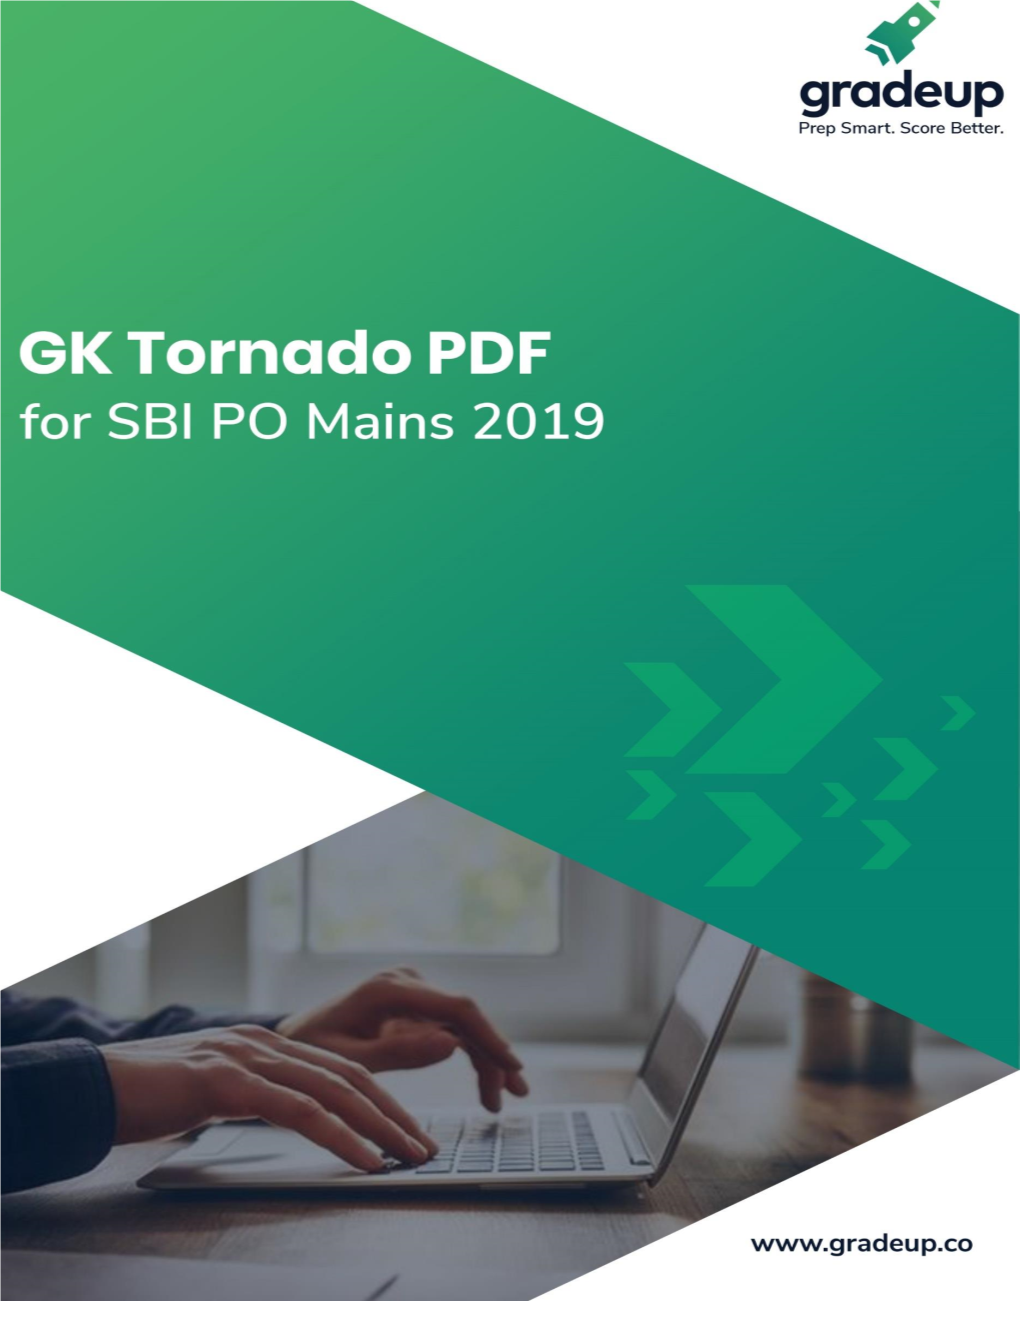 GK Tornado for SBI PO Main Exam 2019